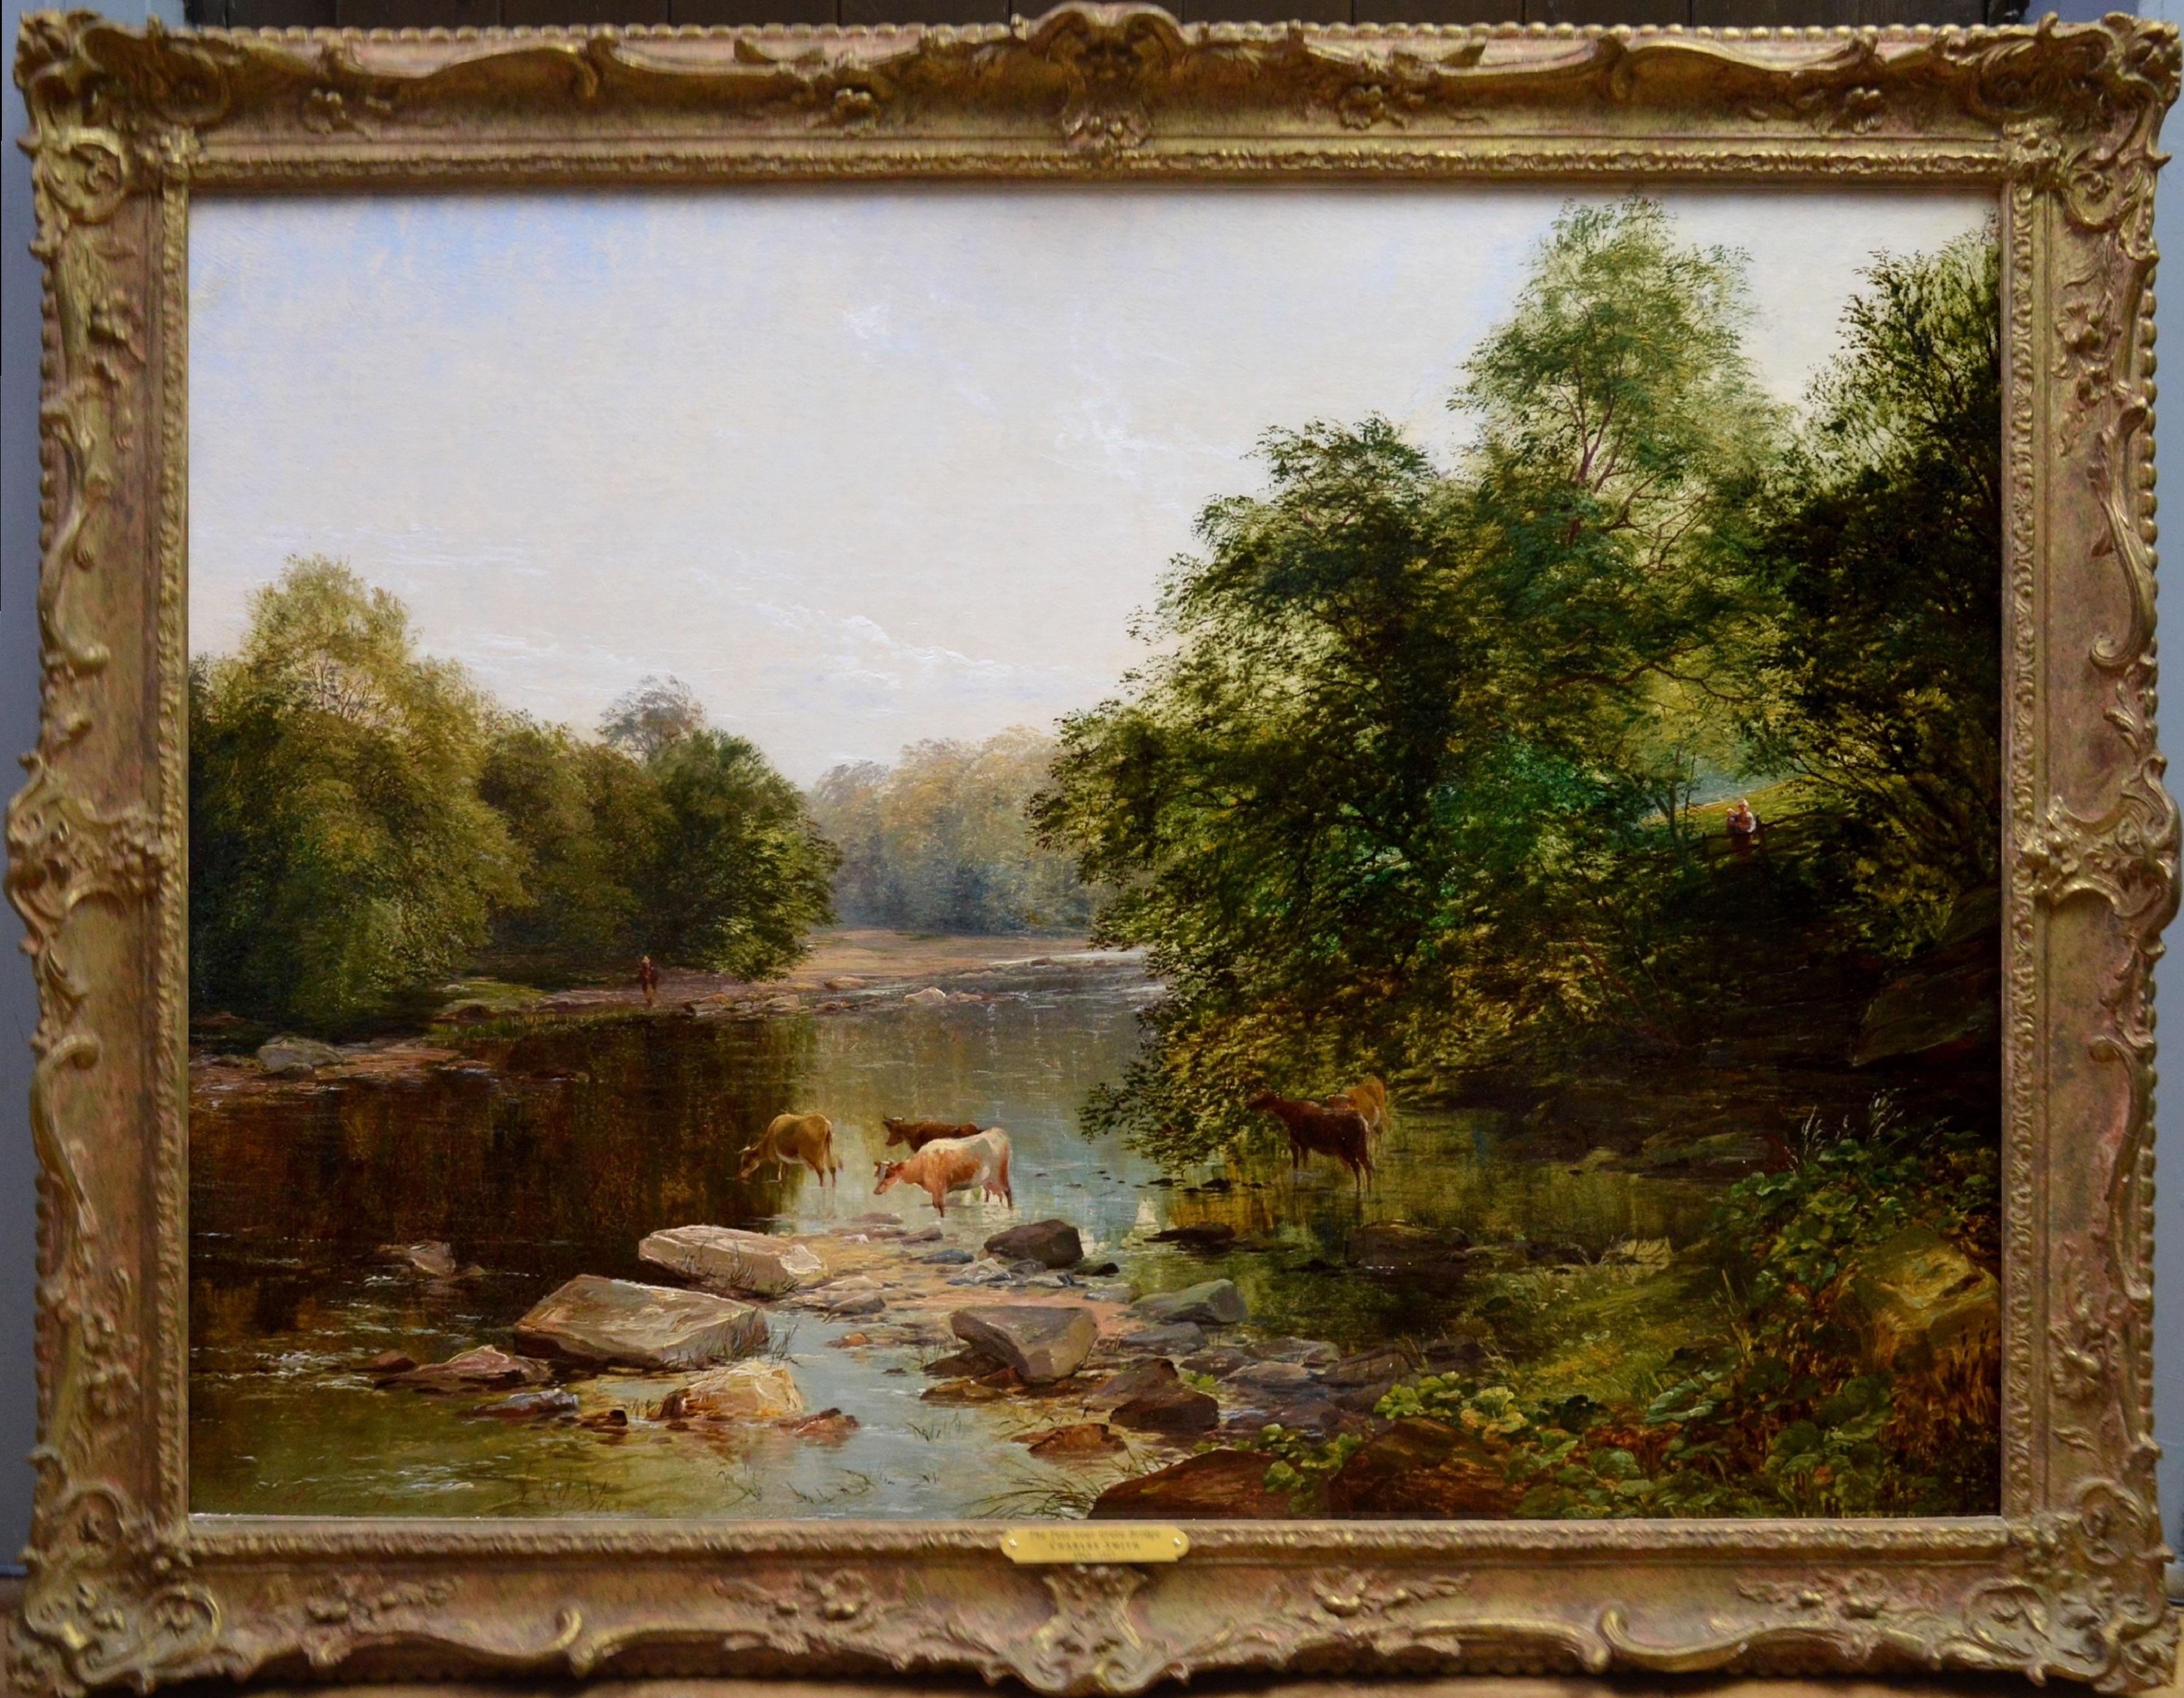 Charles Smith Animal Painting - The Tees near Greta Bridge - 19th Century Oil Painting - English River Fishing